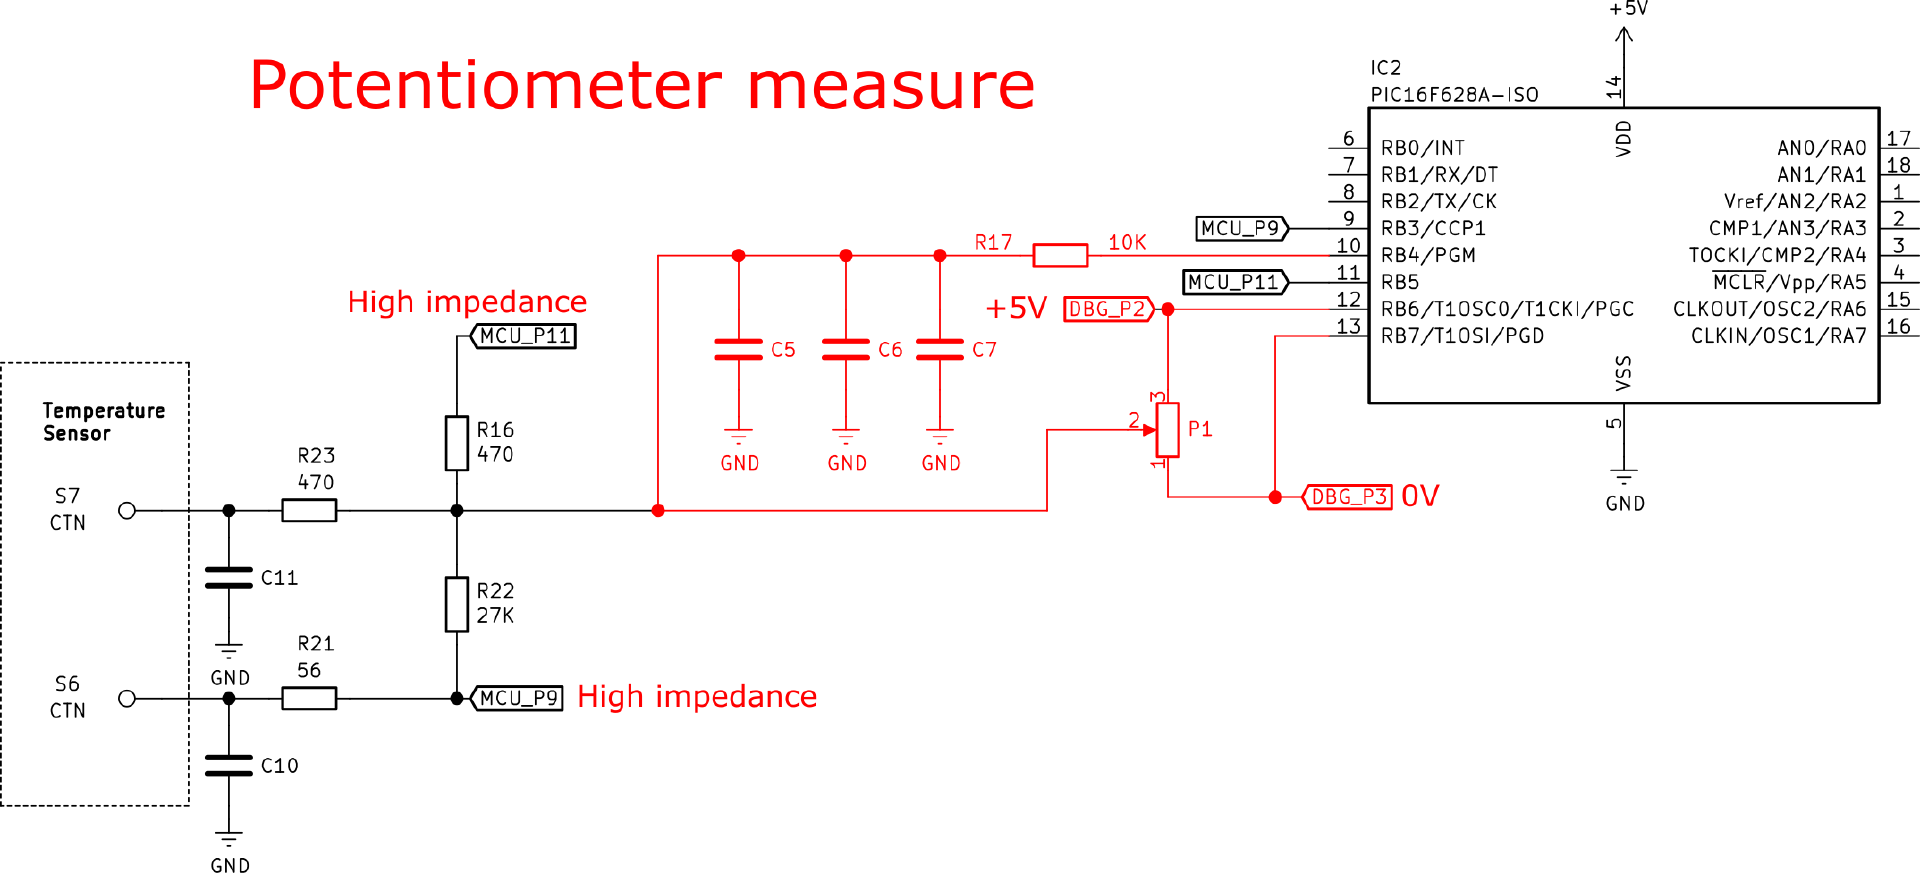 Potentiometer measure